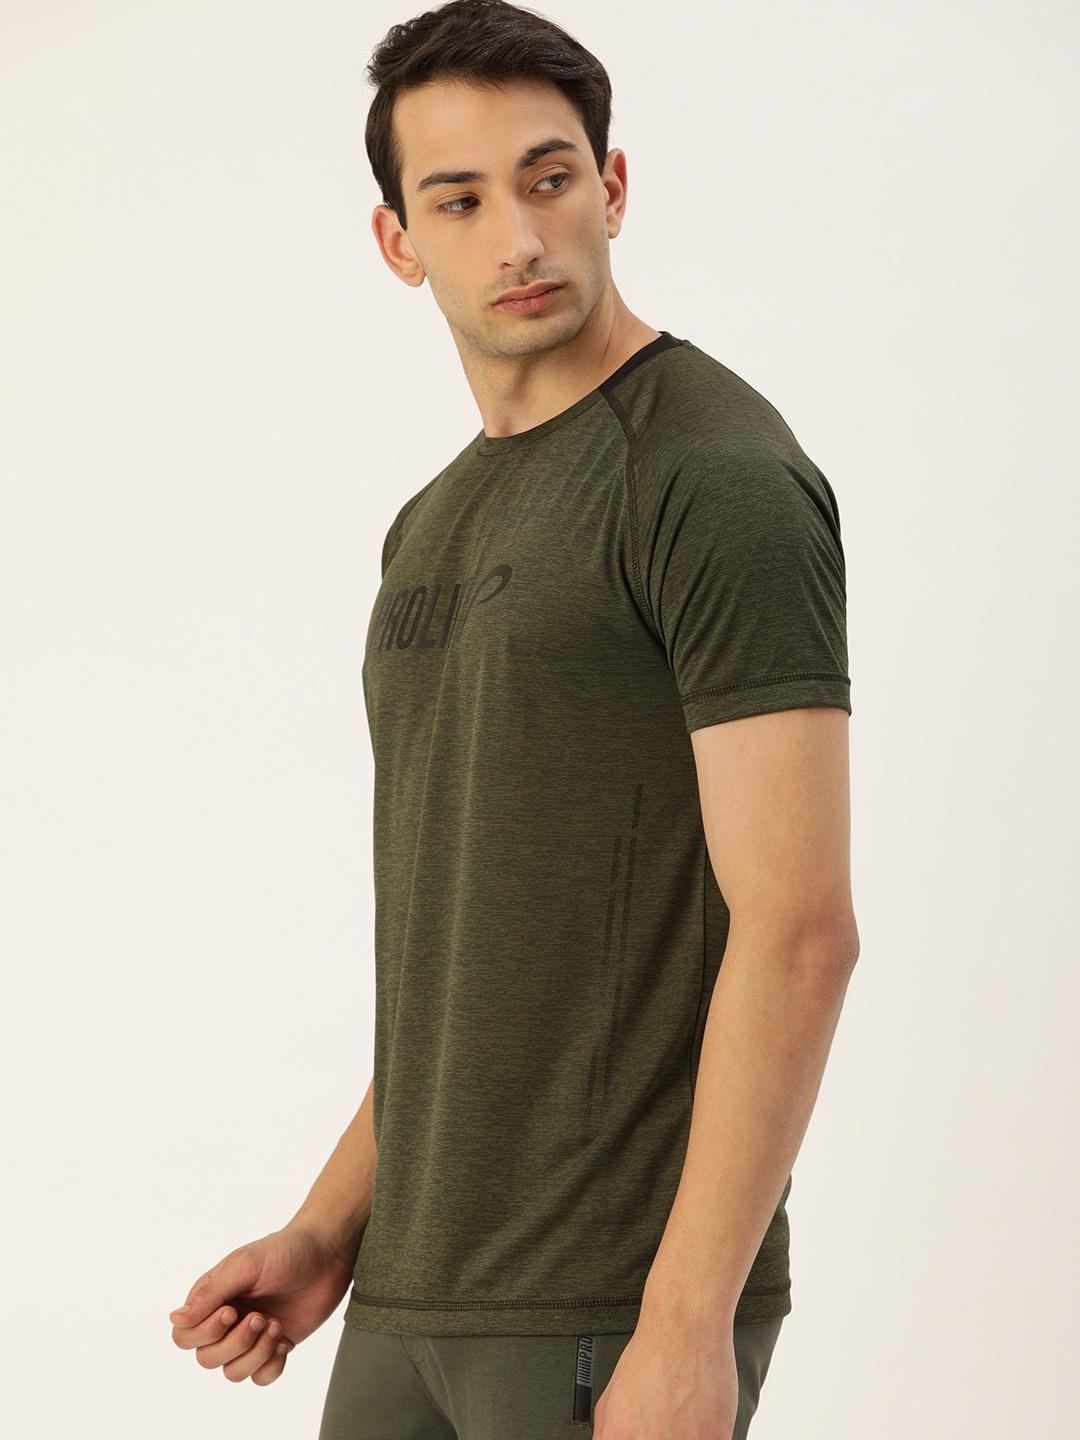 proline-active-men-olive-green-r-elan-printed-round-neck-t-shirt